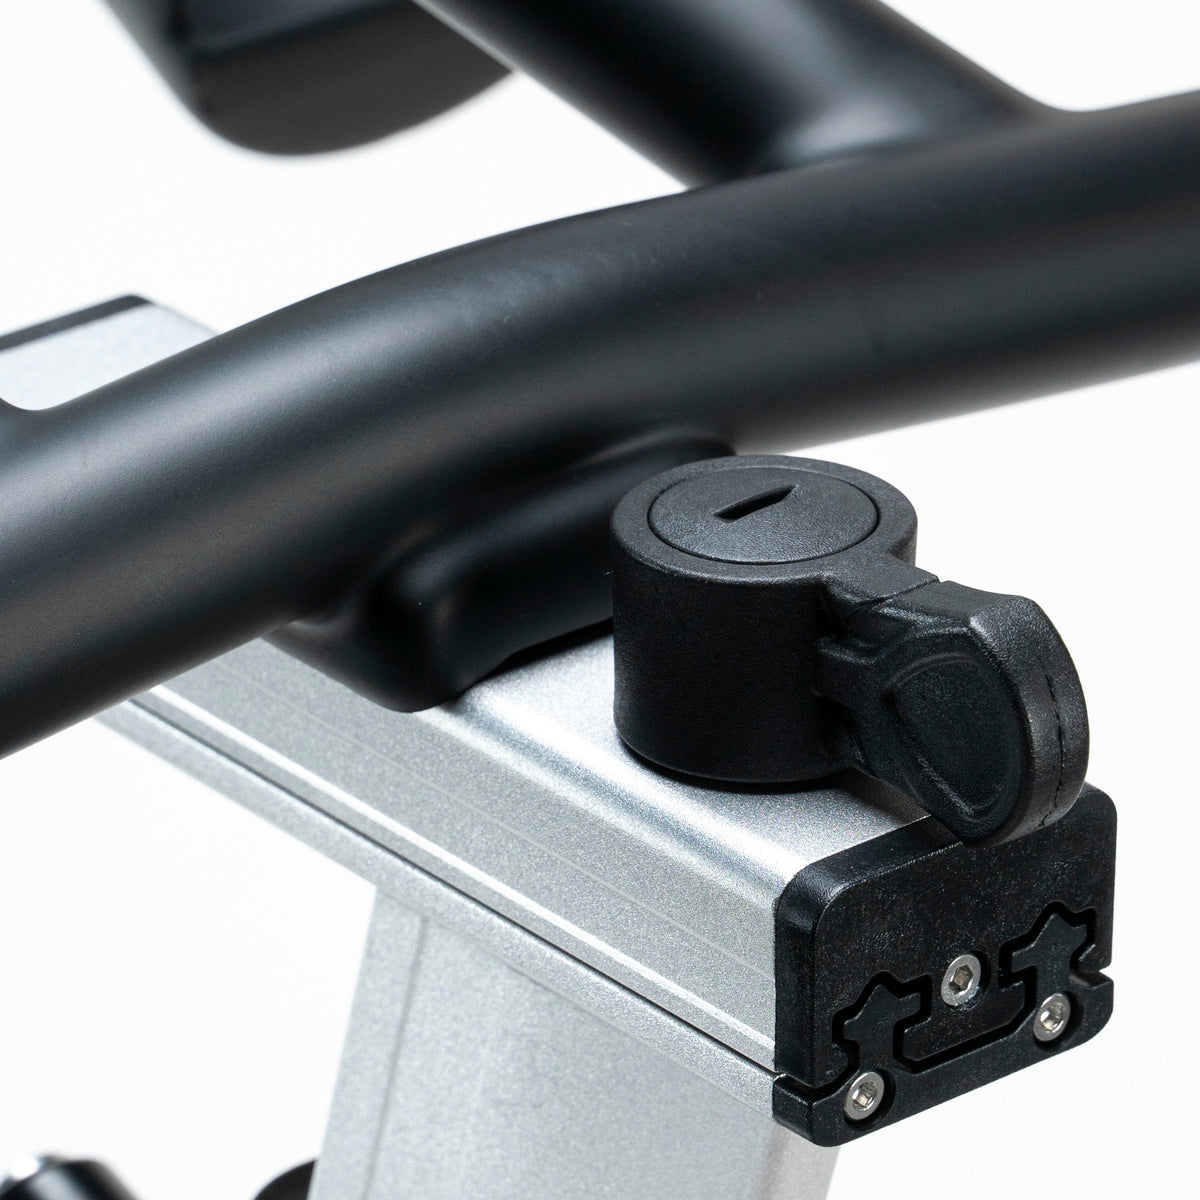 FitWay Equip. 1500IC Indoor Cycle - Handle Bar Adjustments